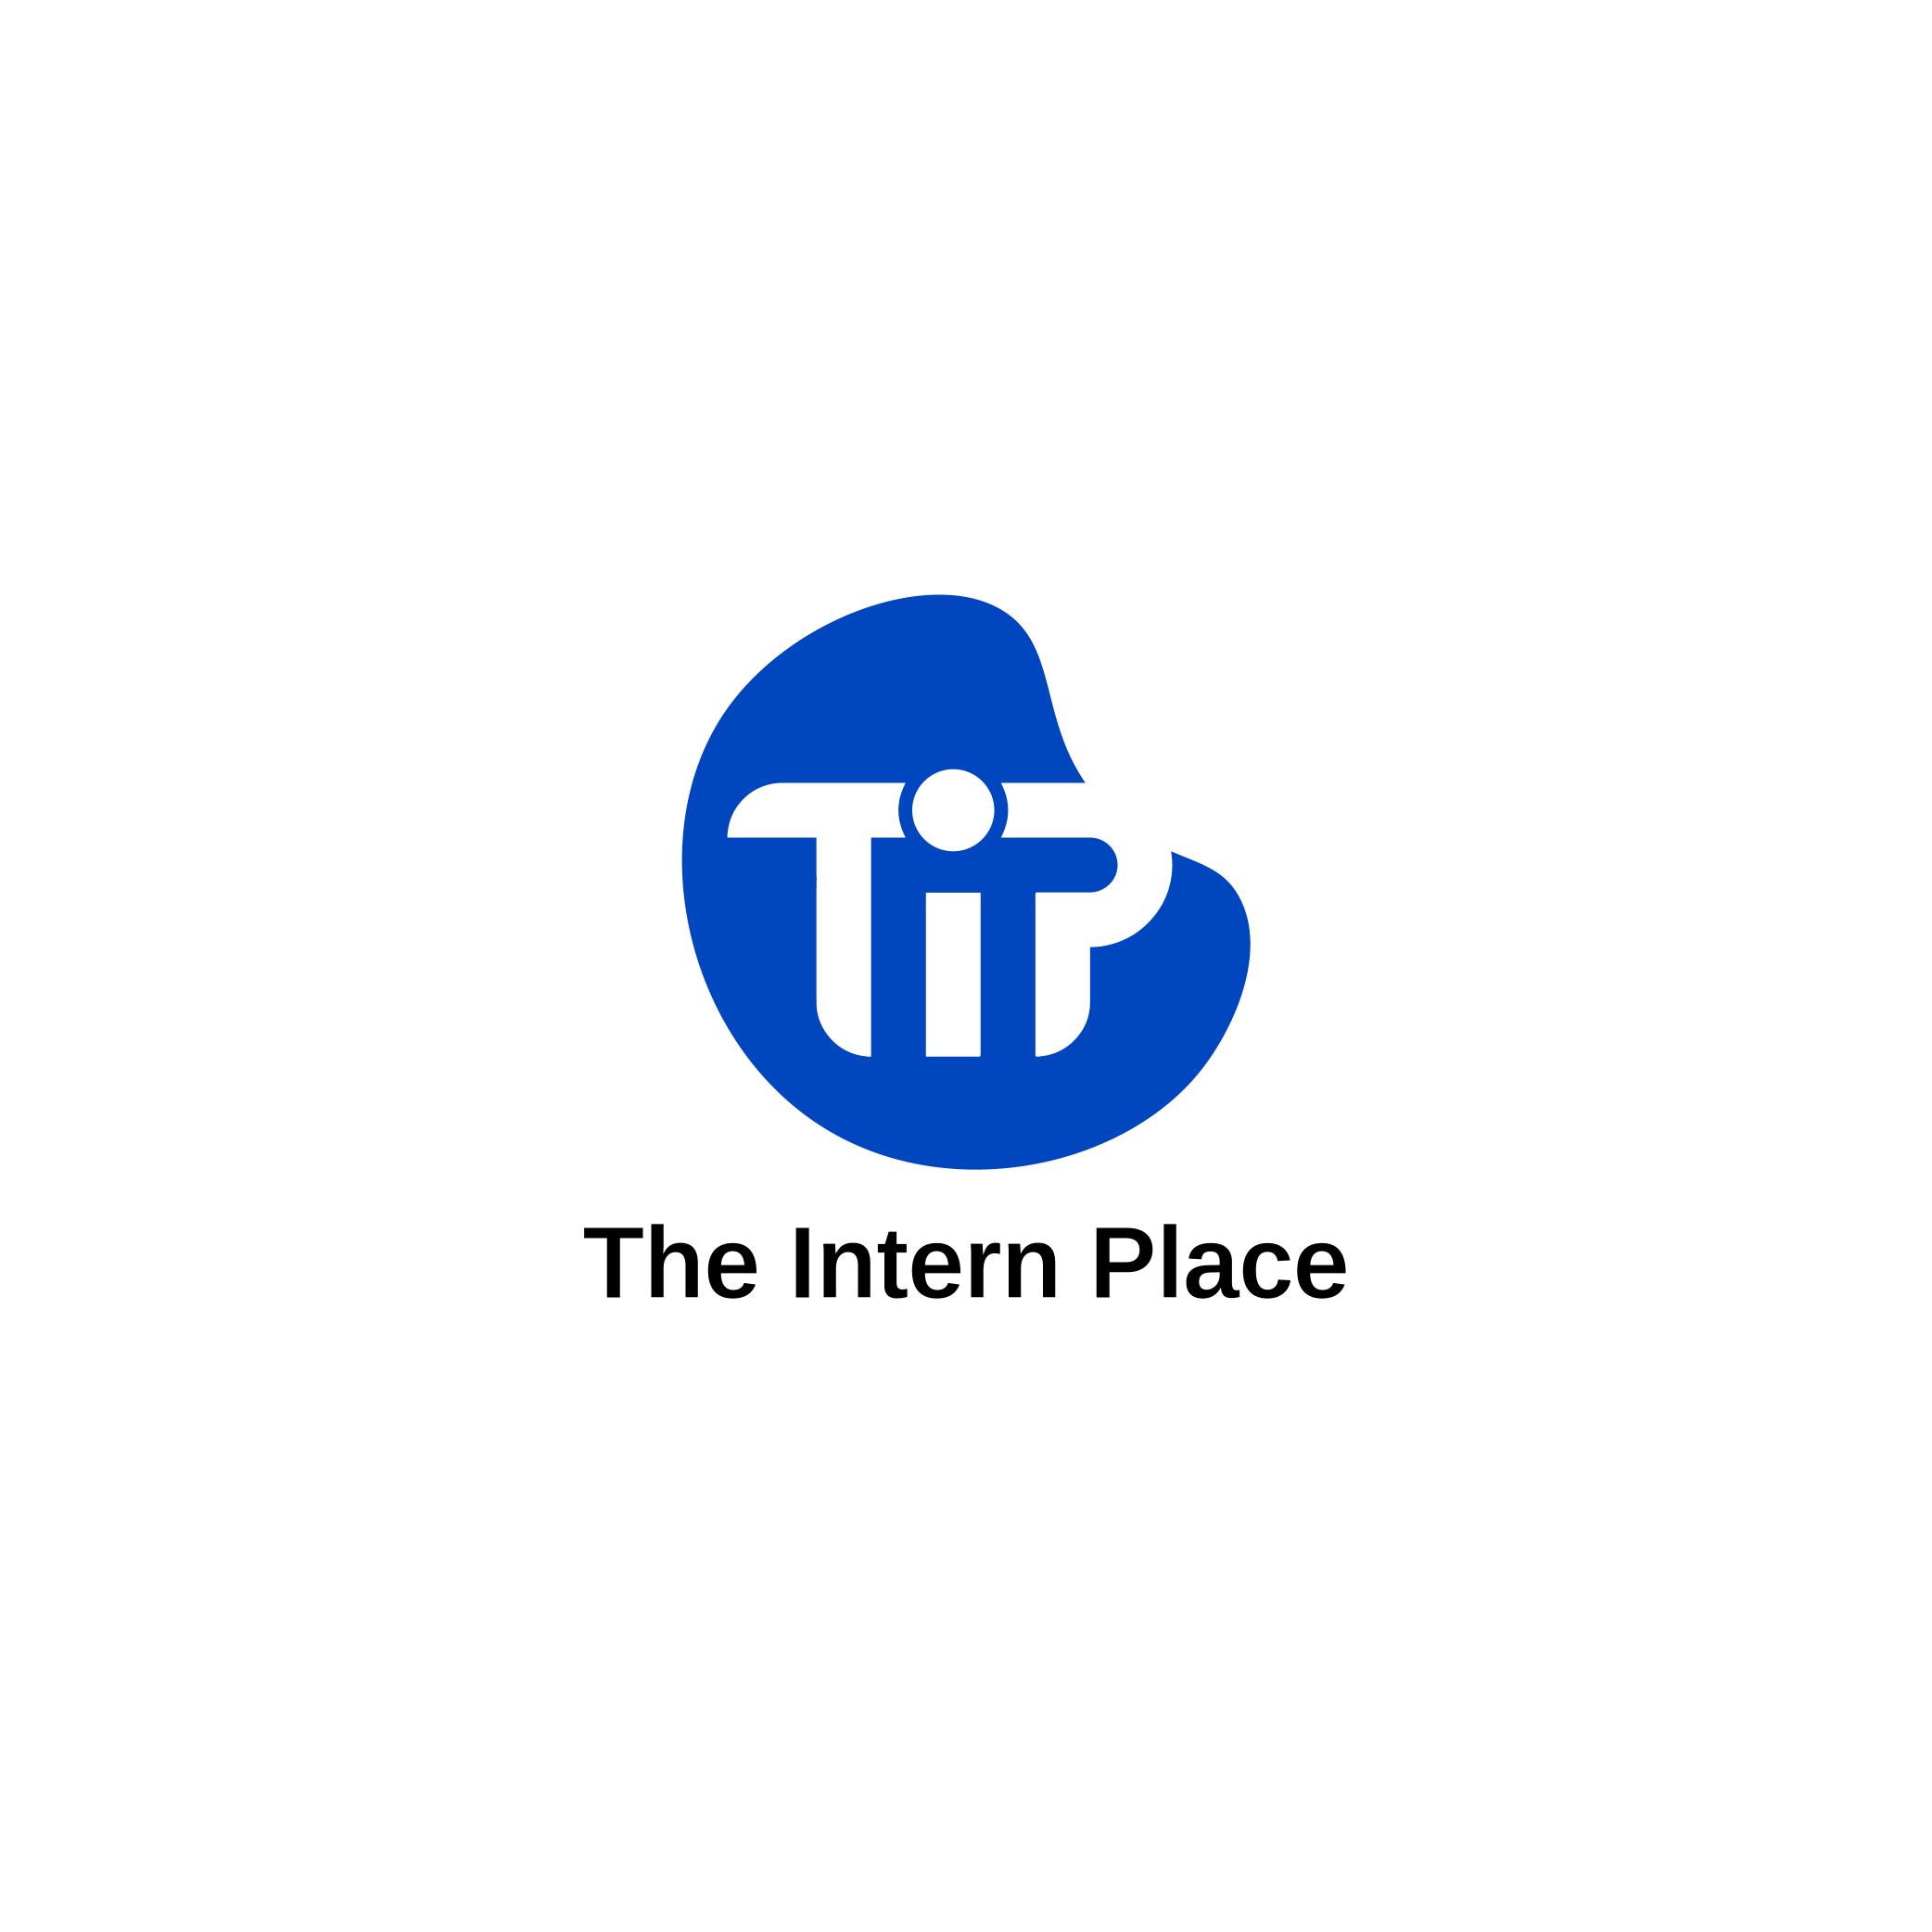 The Intern Place logo